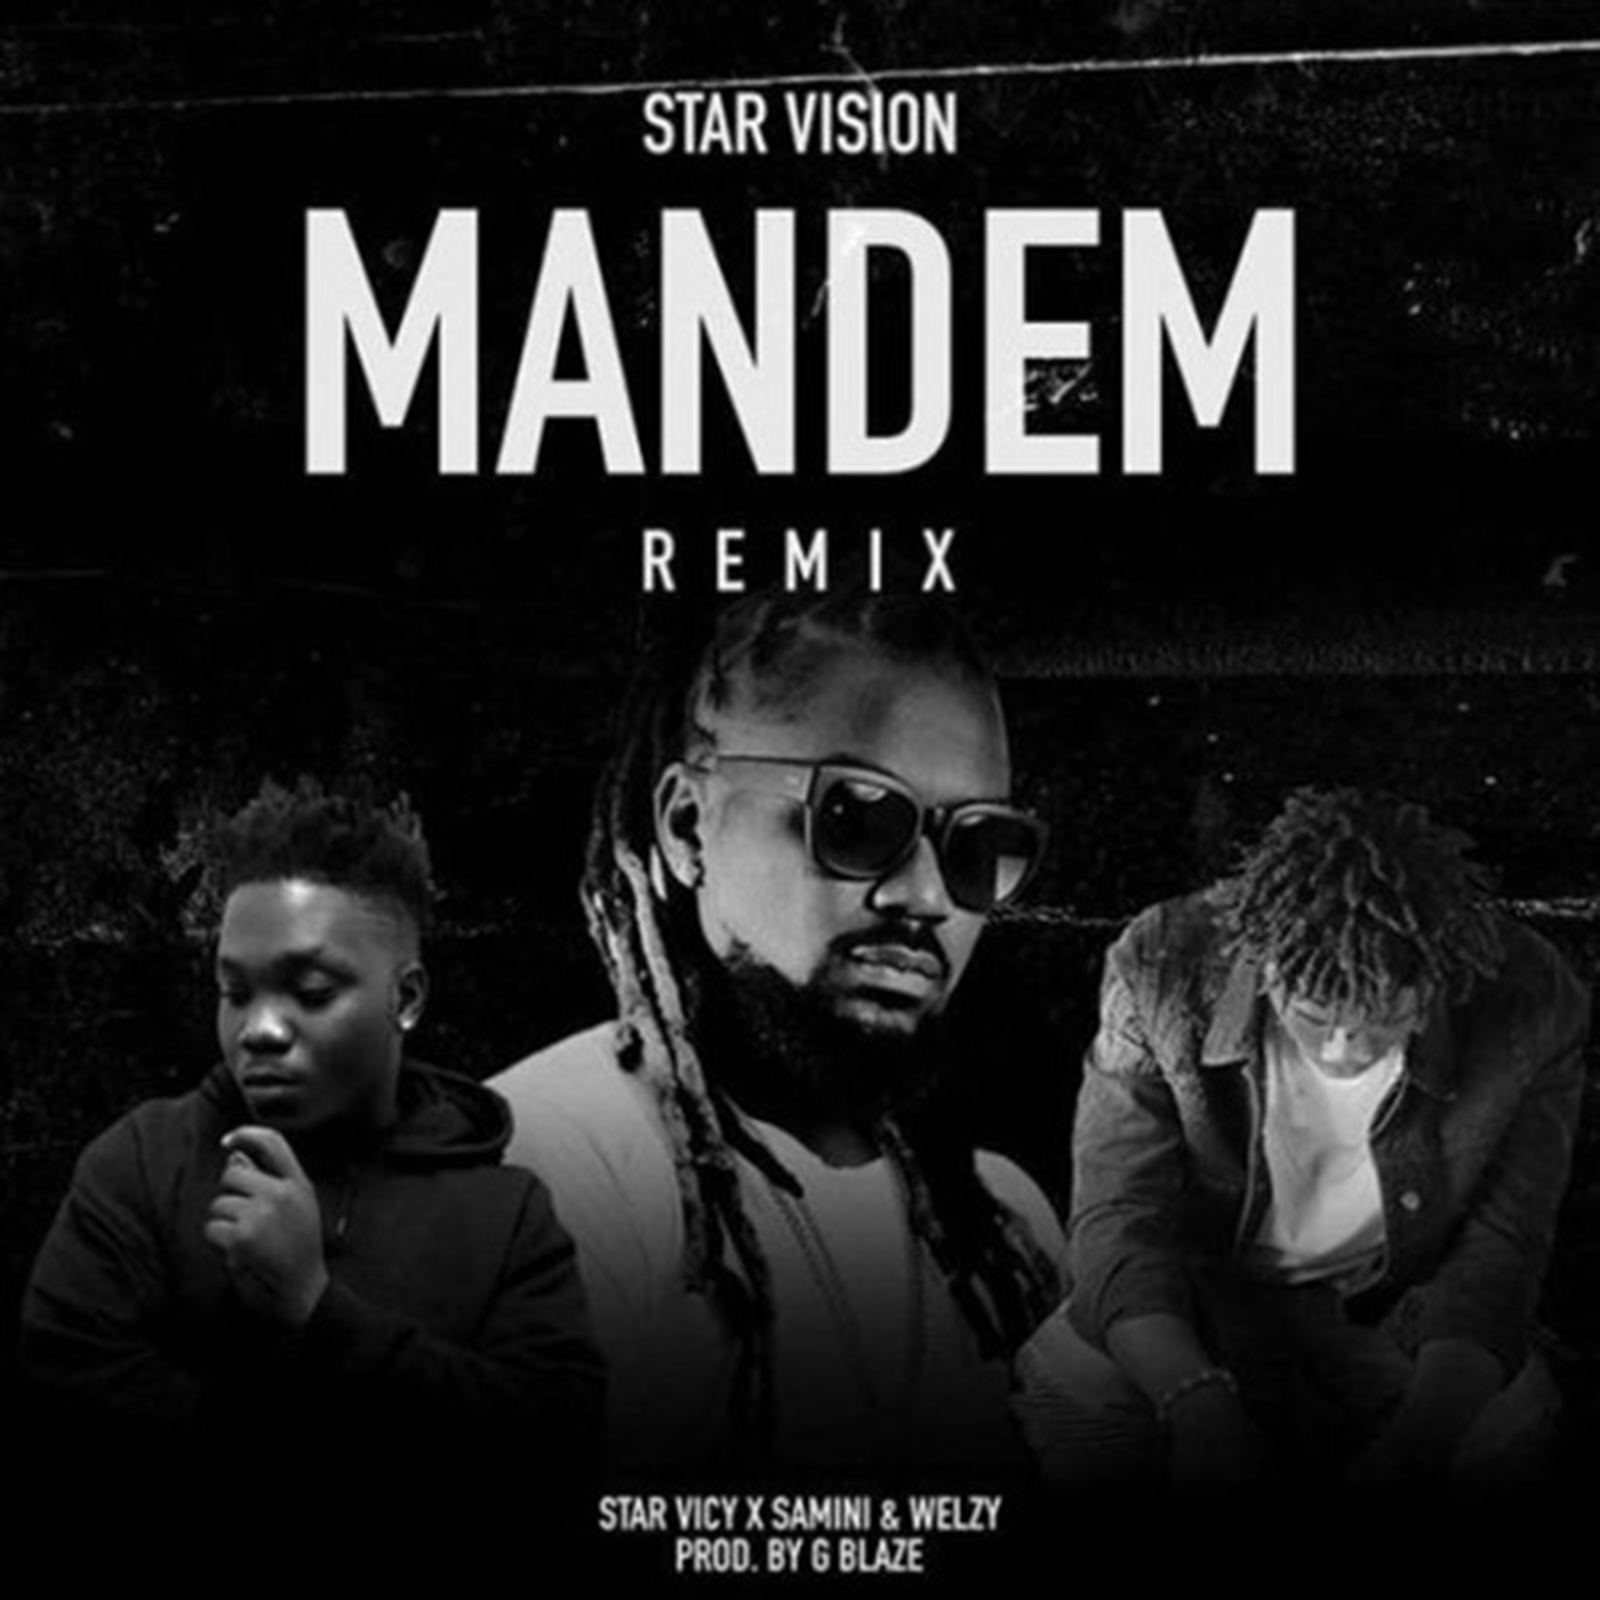 Mandem by Star Vicy & Welzy feat. Samini